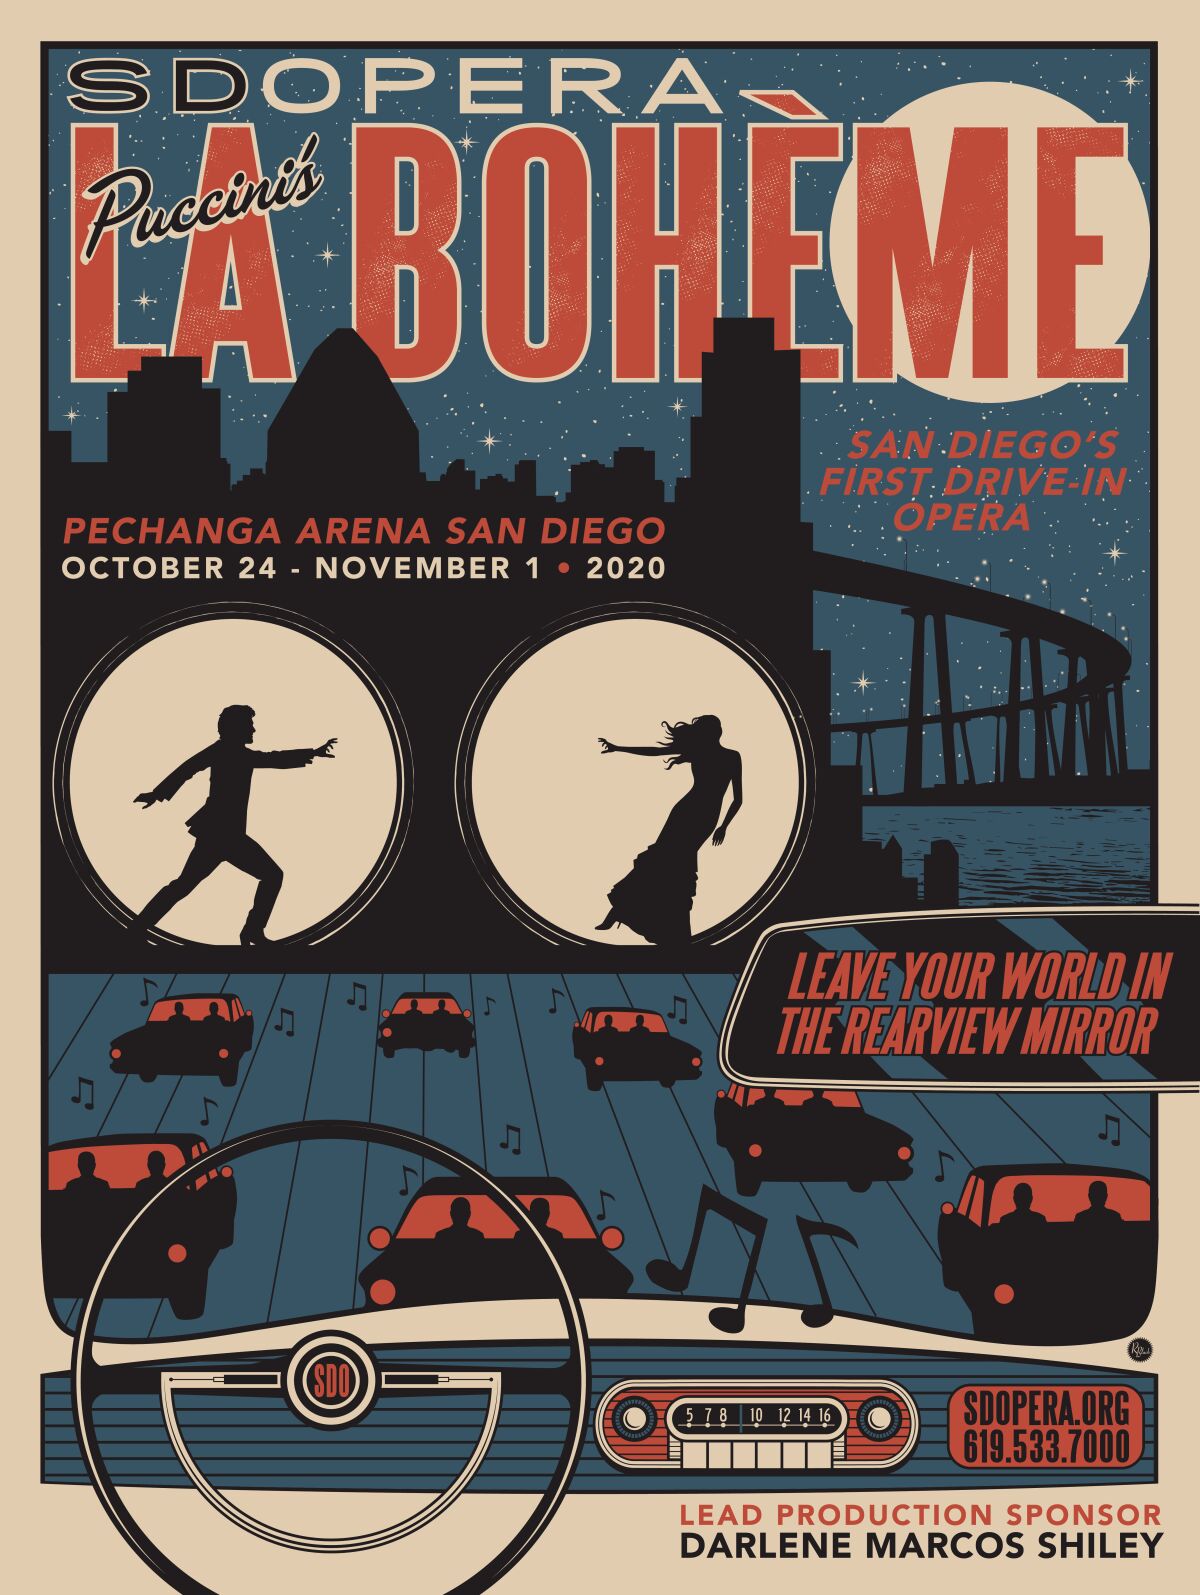 San Diego Opera presented “La Boheme” in the parking lot of Pechanga Arena.